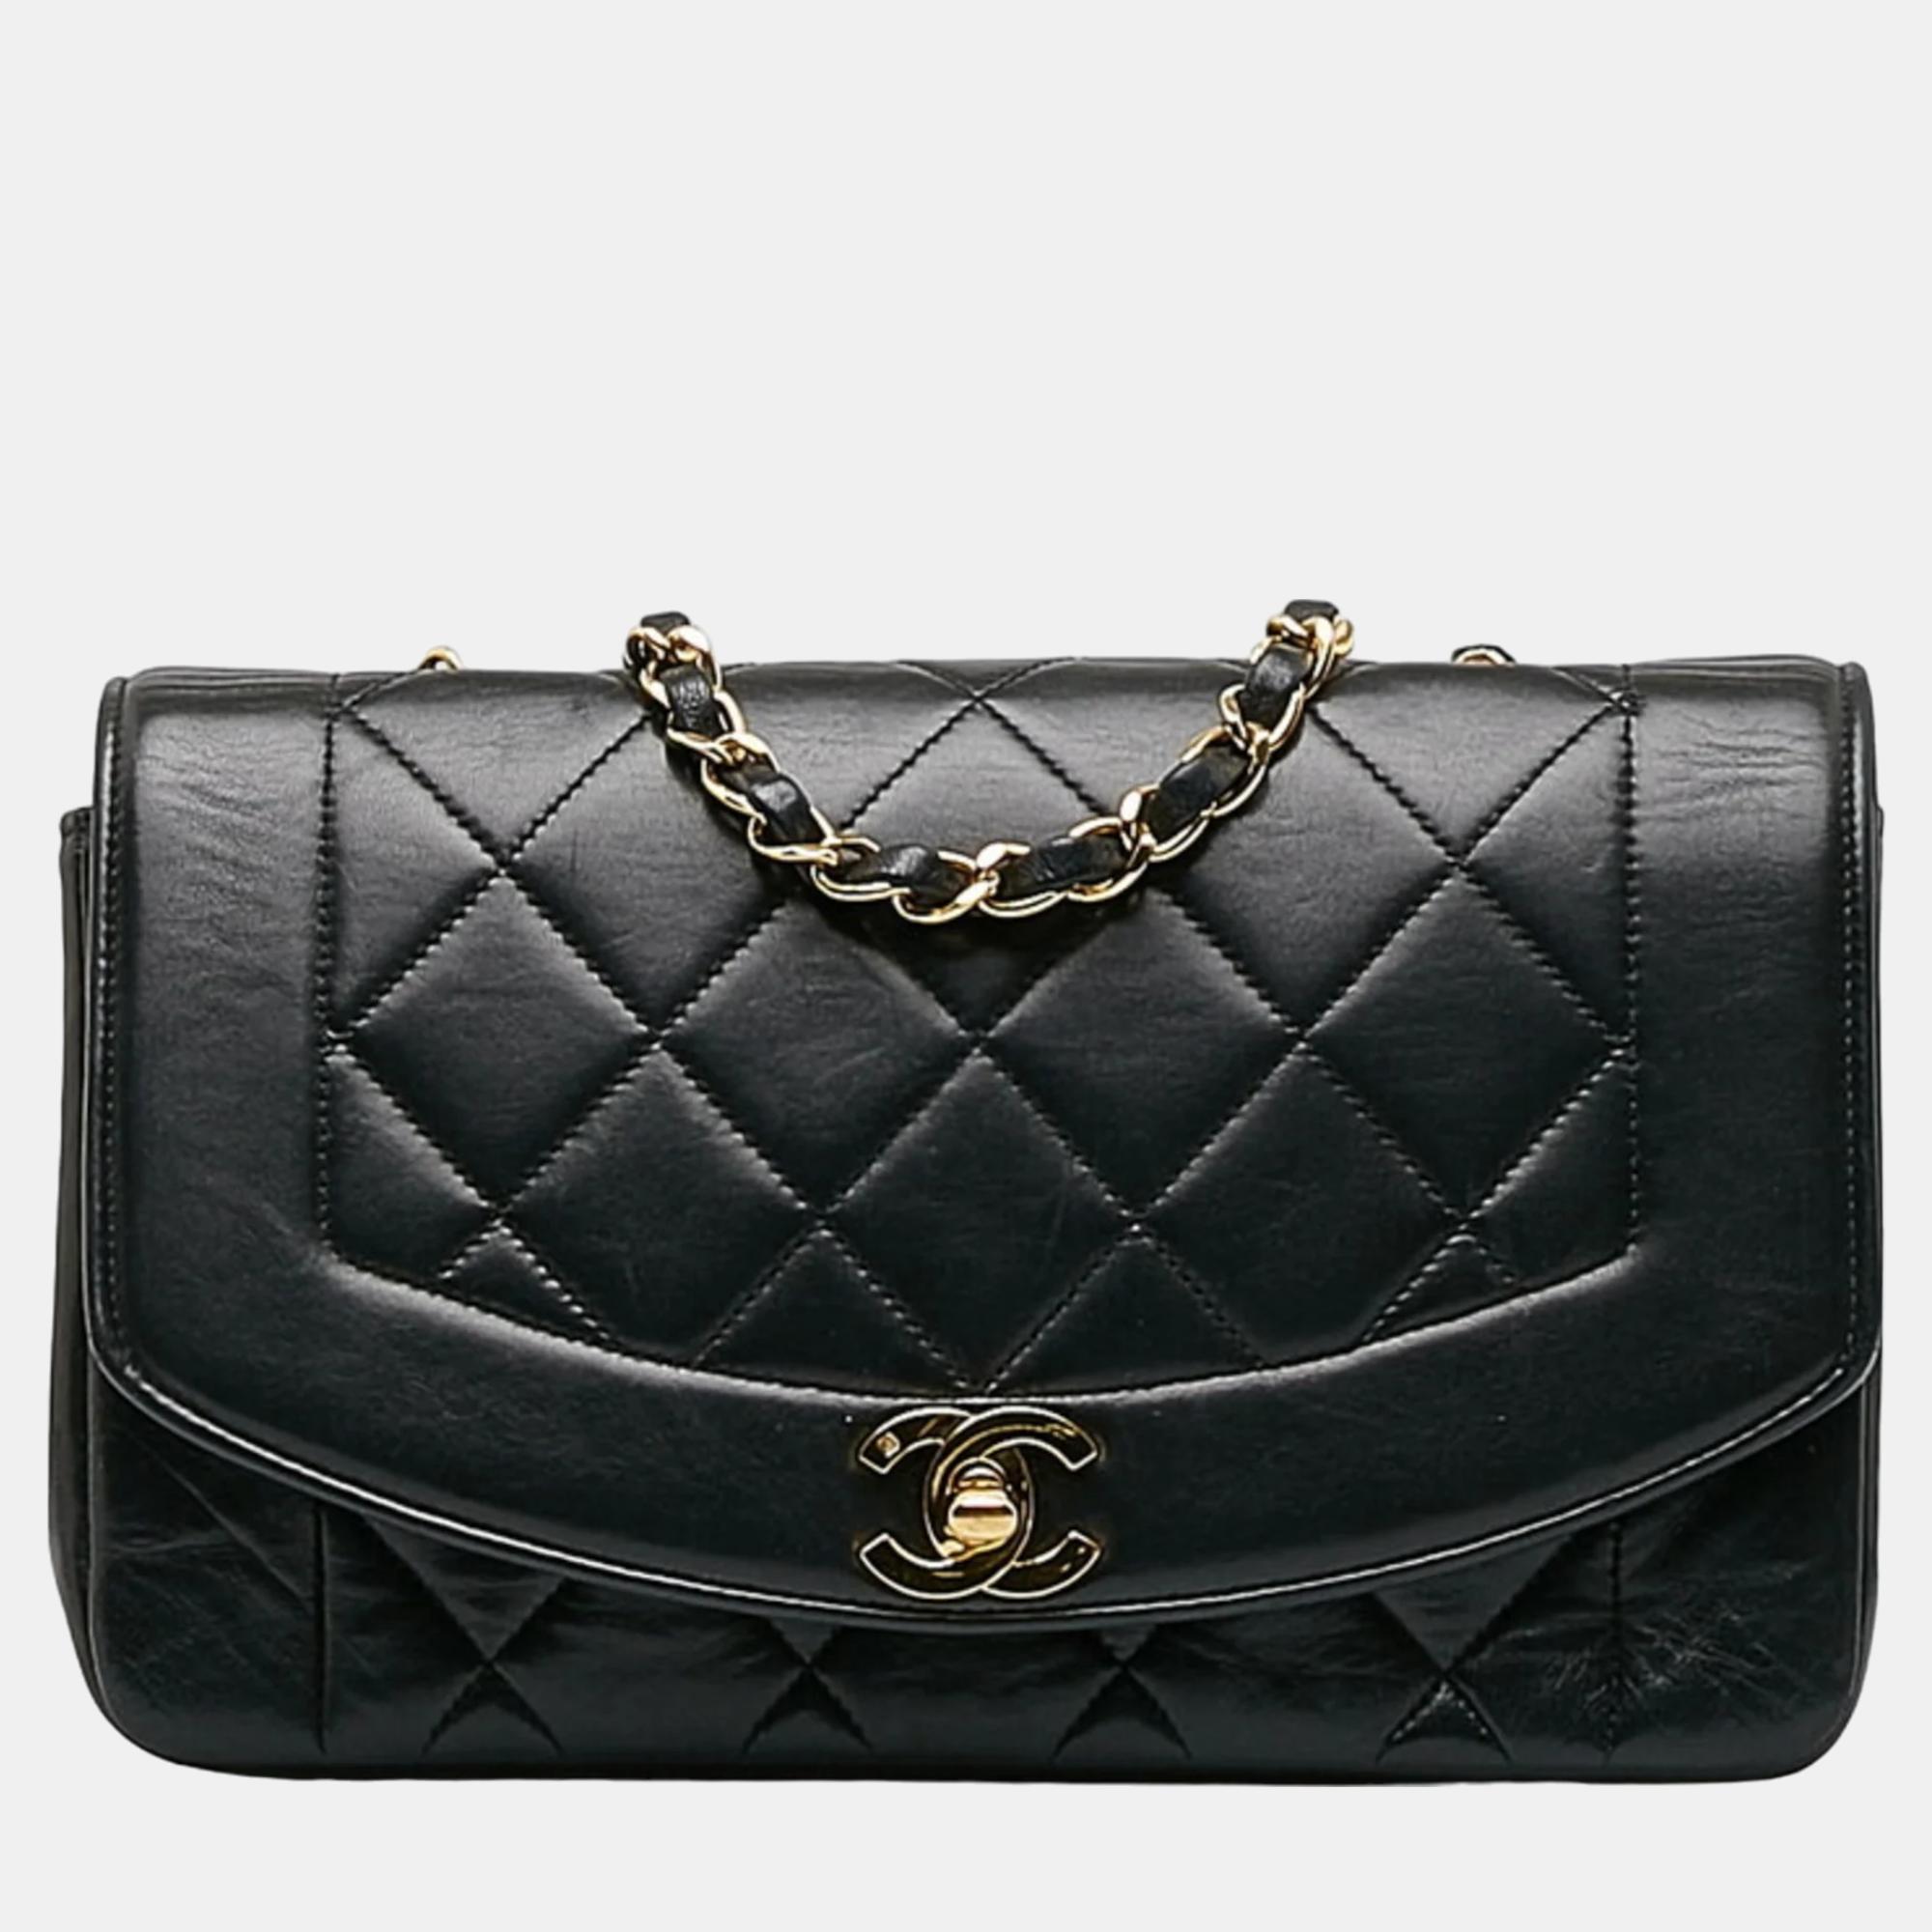 Chanel  black lambskin leather mini vintage diana flap bag